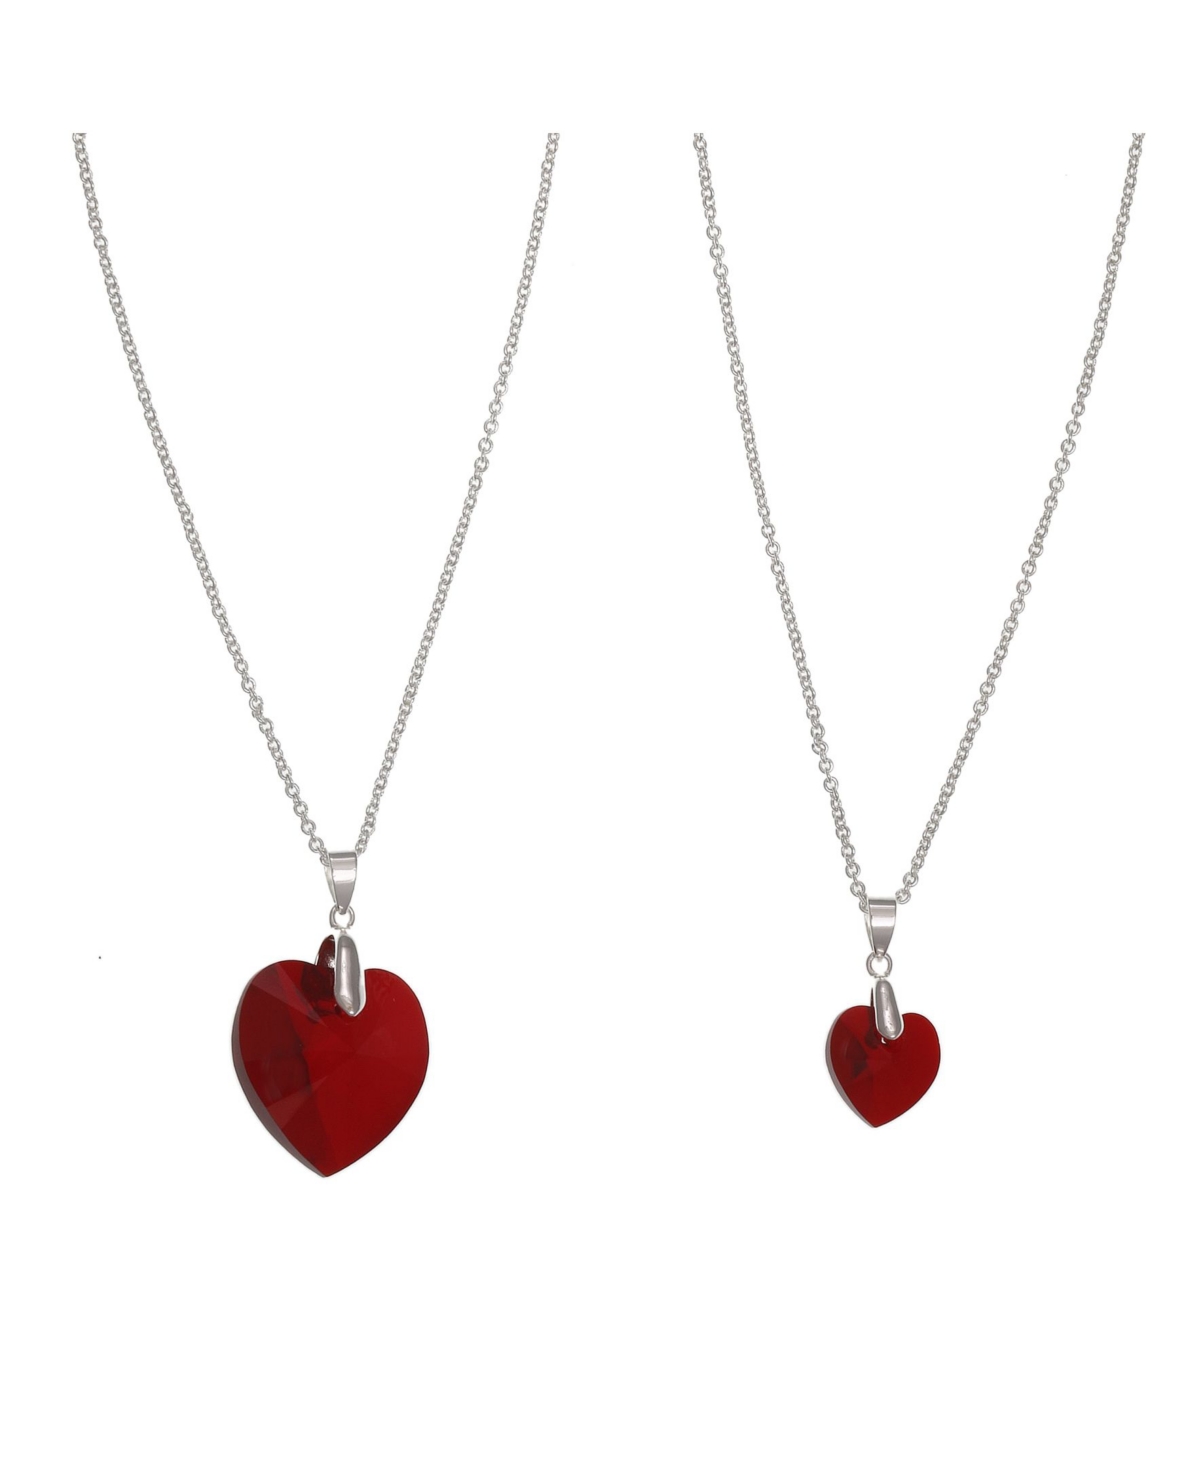 Fao Schwarz Women's Cubic Zirconia Stone Heart Pendant Necklace Set, 2 Piece